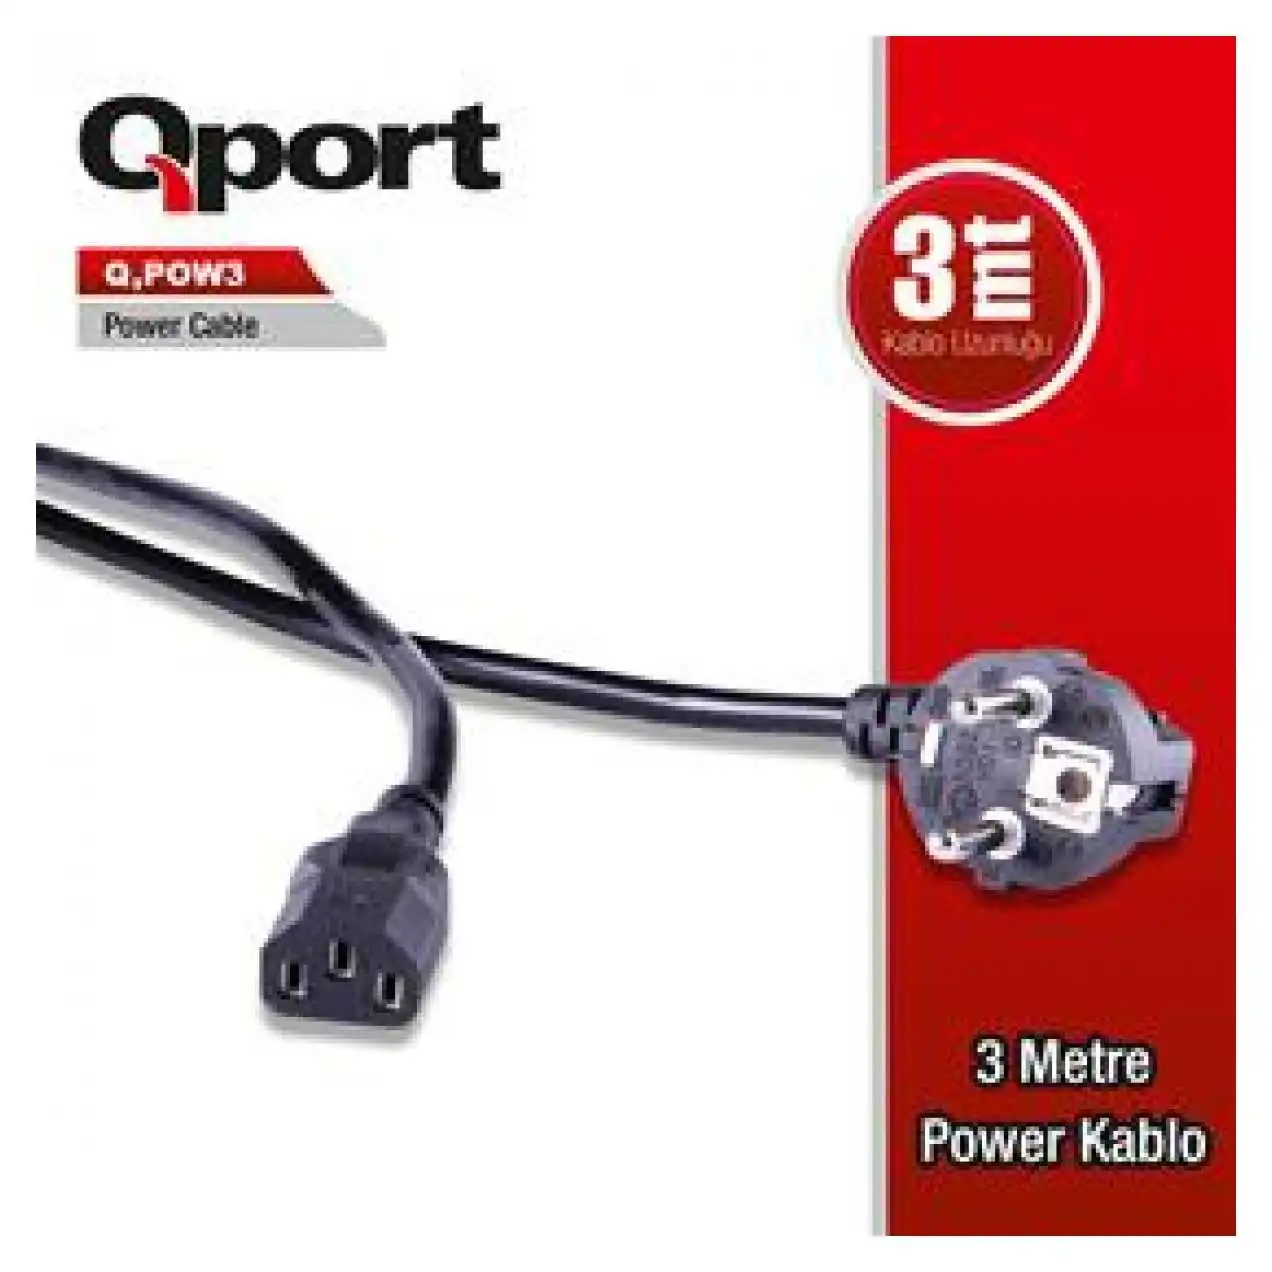 qport-q-pow3-3-metre-pc-power-kablosu-ürün-resmi-thumbnail